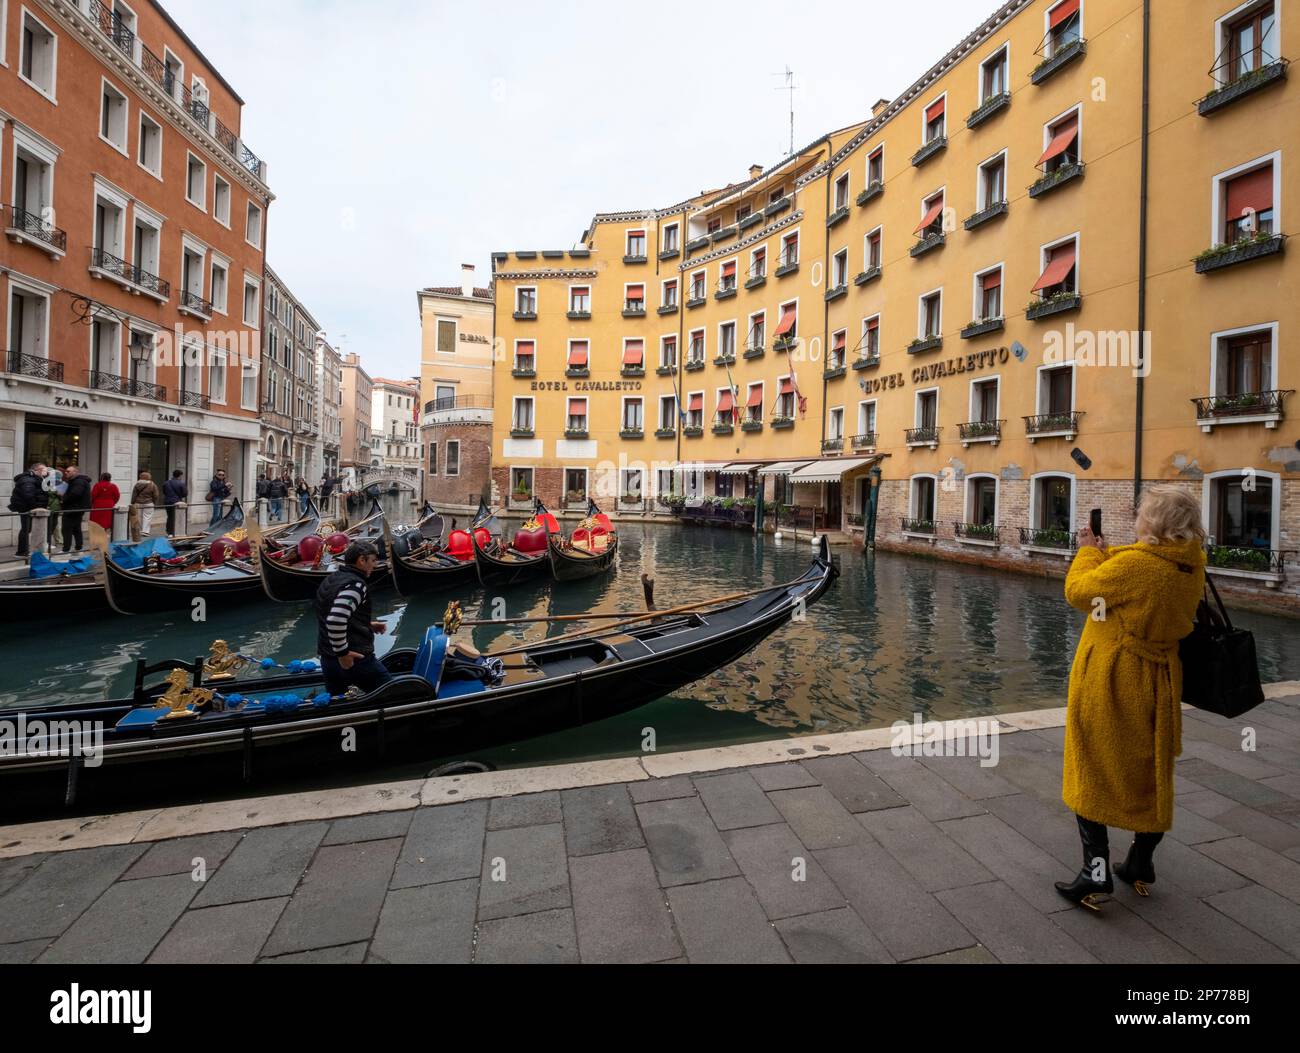 Gondolas tied up near the Hotel Cavalletto, San Marco district, Venice, Italy Stock Photo